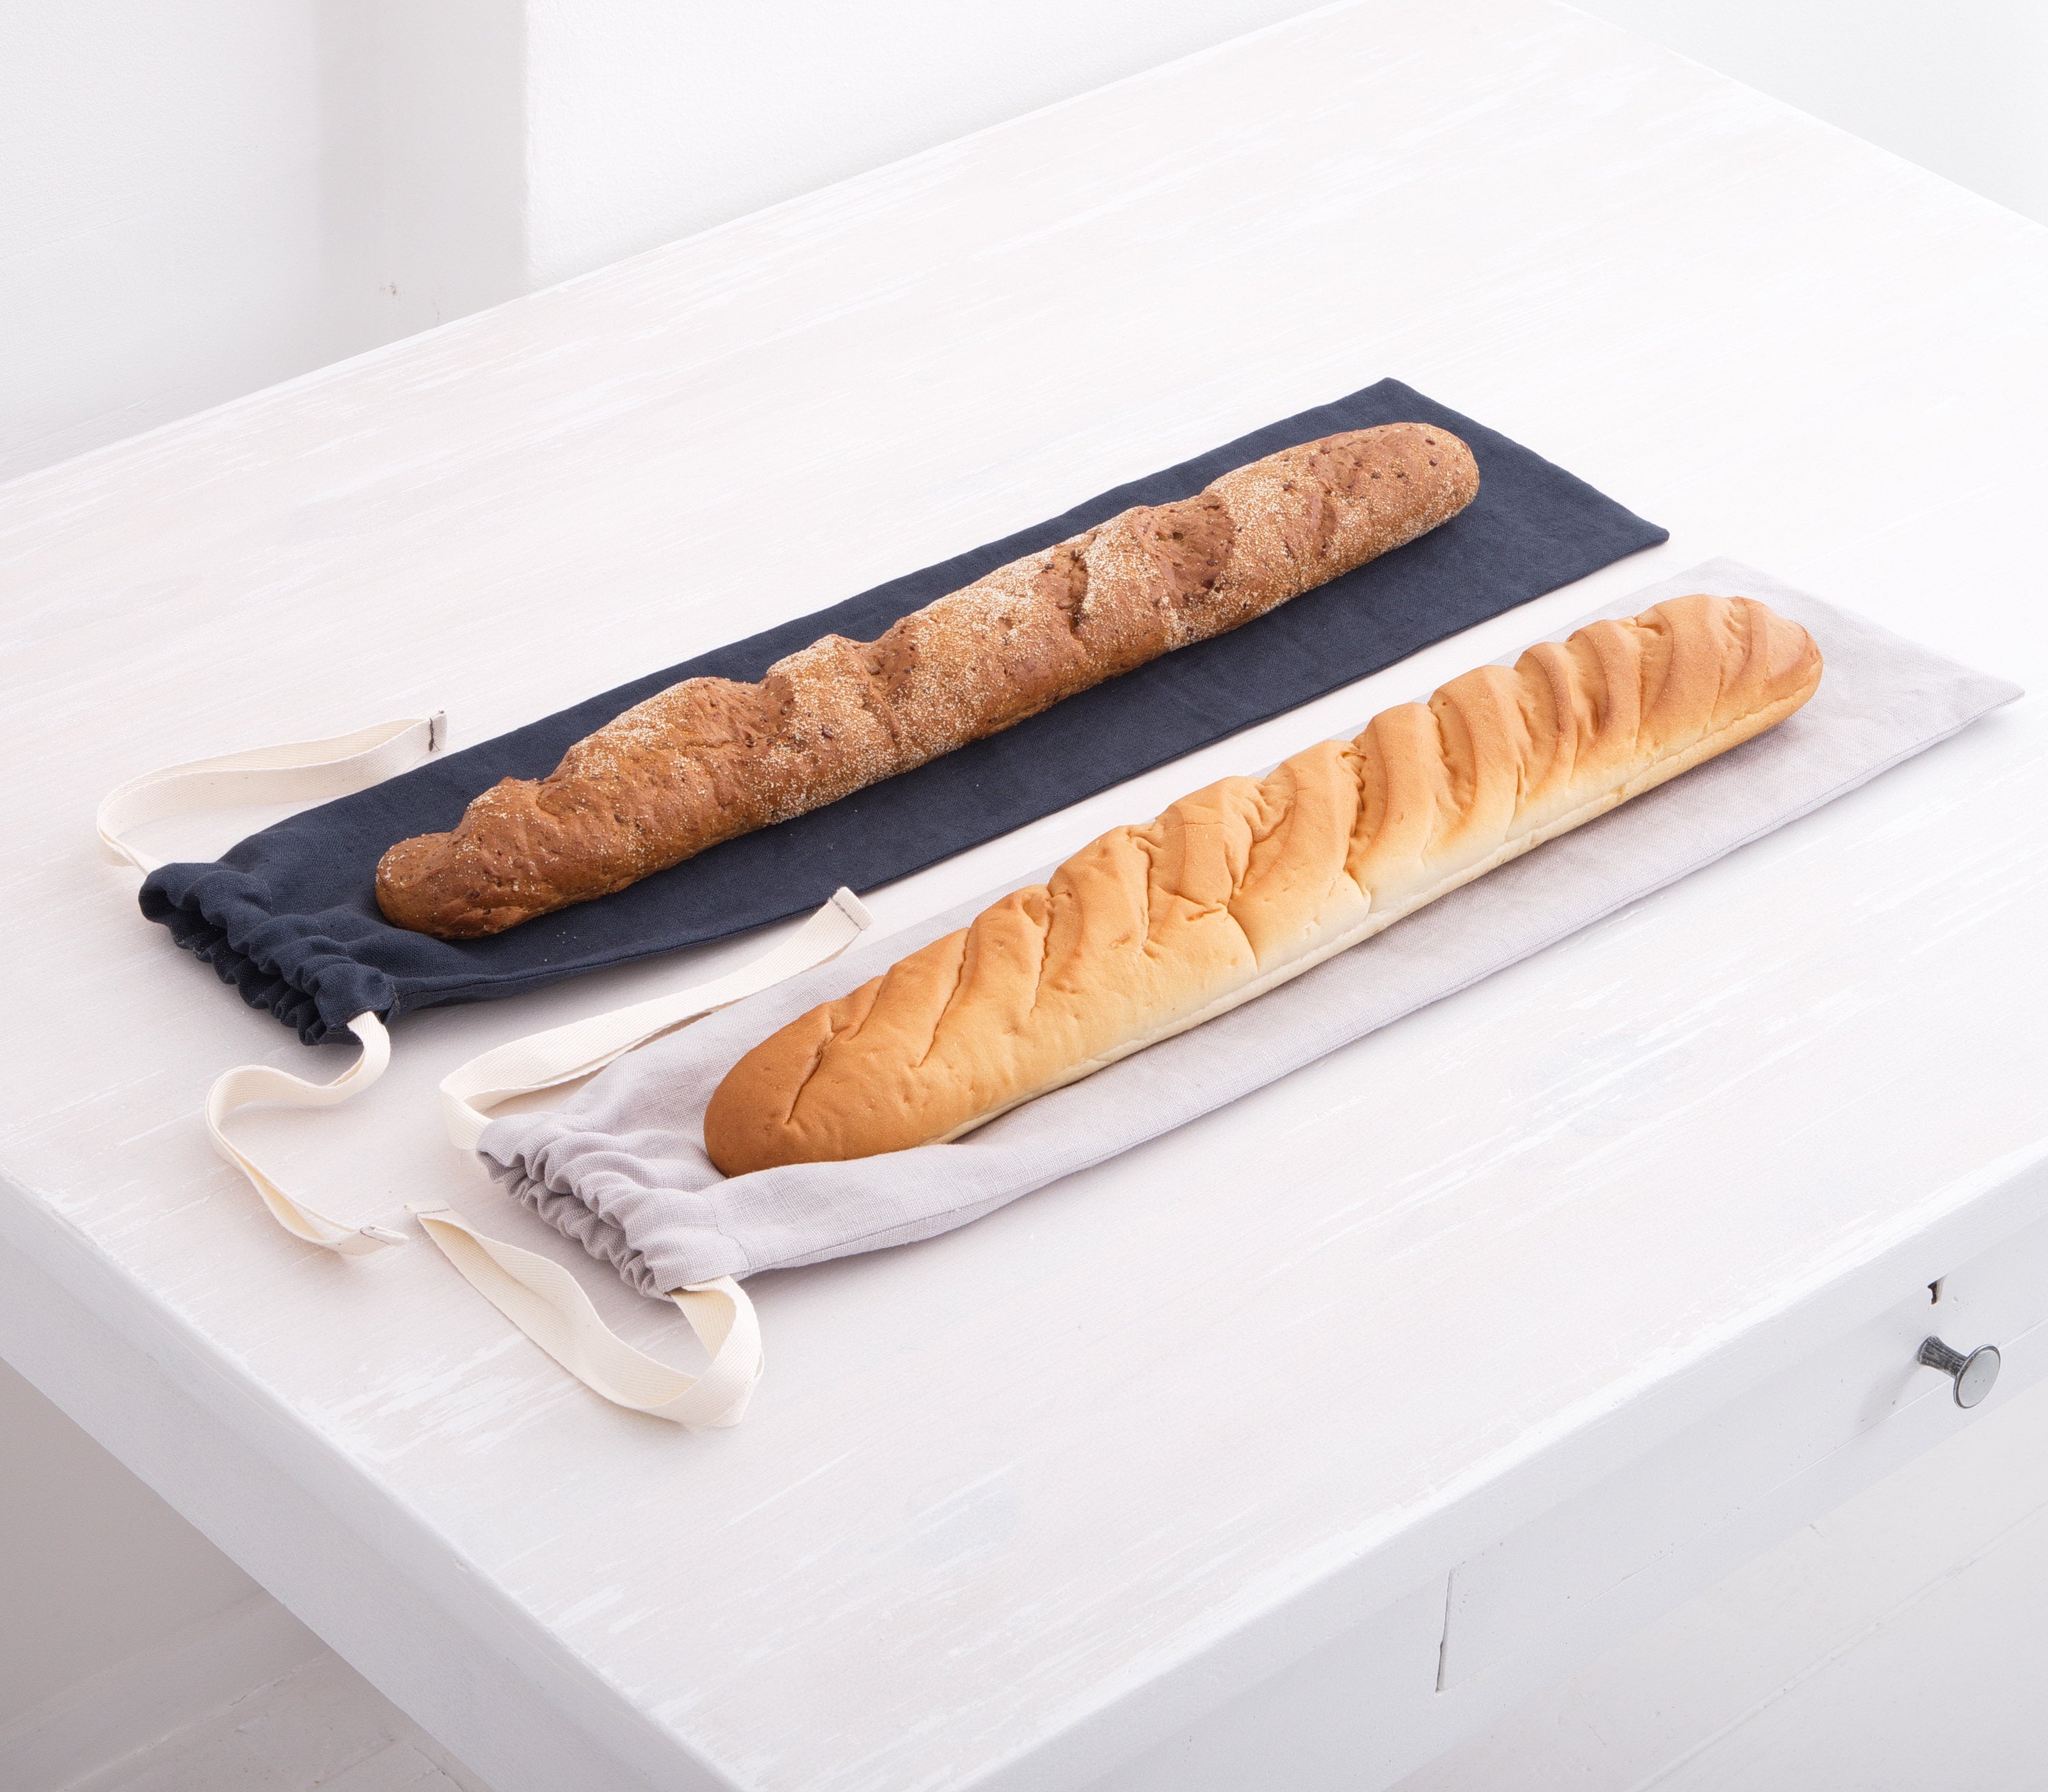 Striped Linen Baguette Bag. Zero Waste Bread Bag for Bread Storage